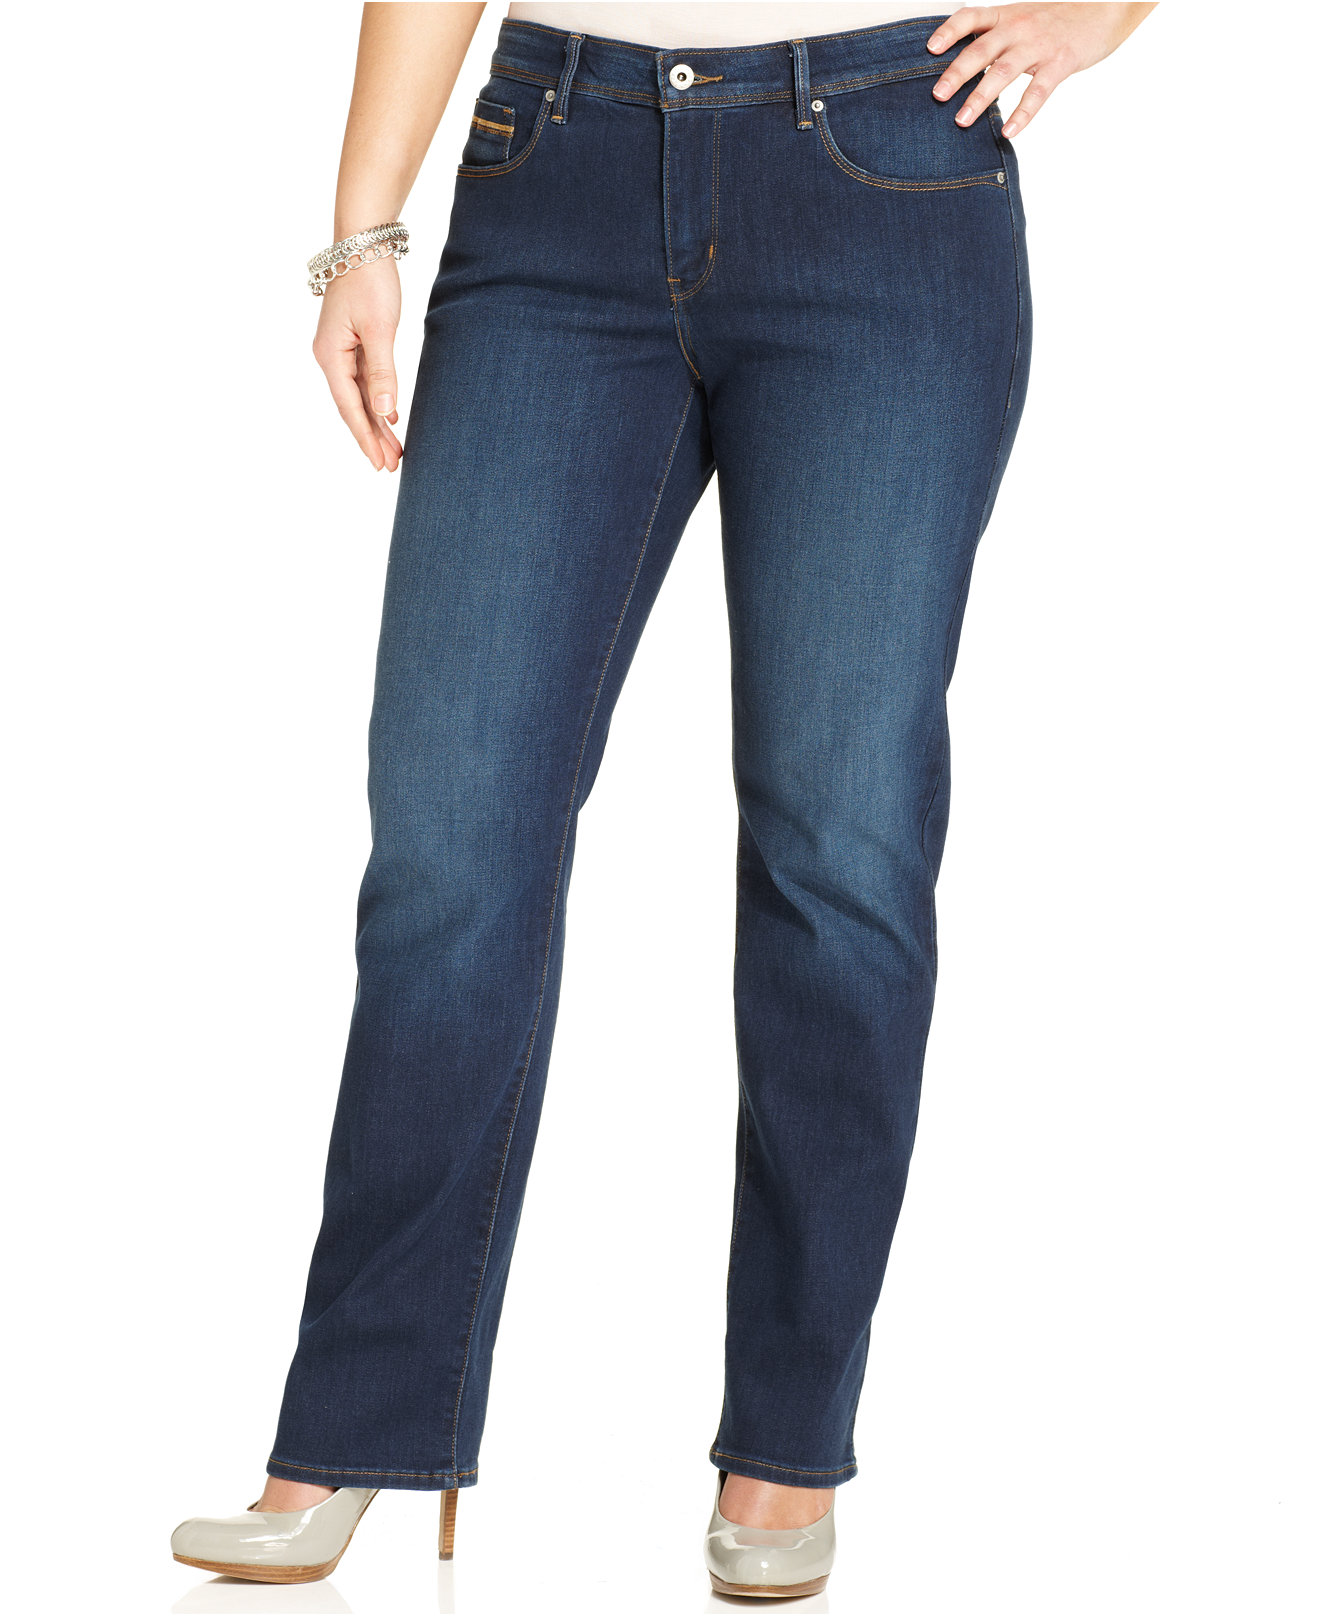 Designer Jeans For Plus Size Women